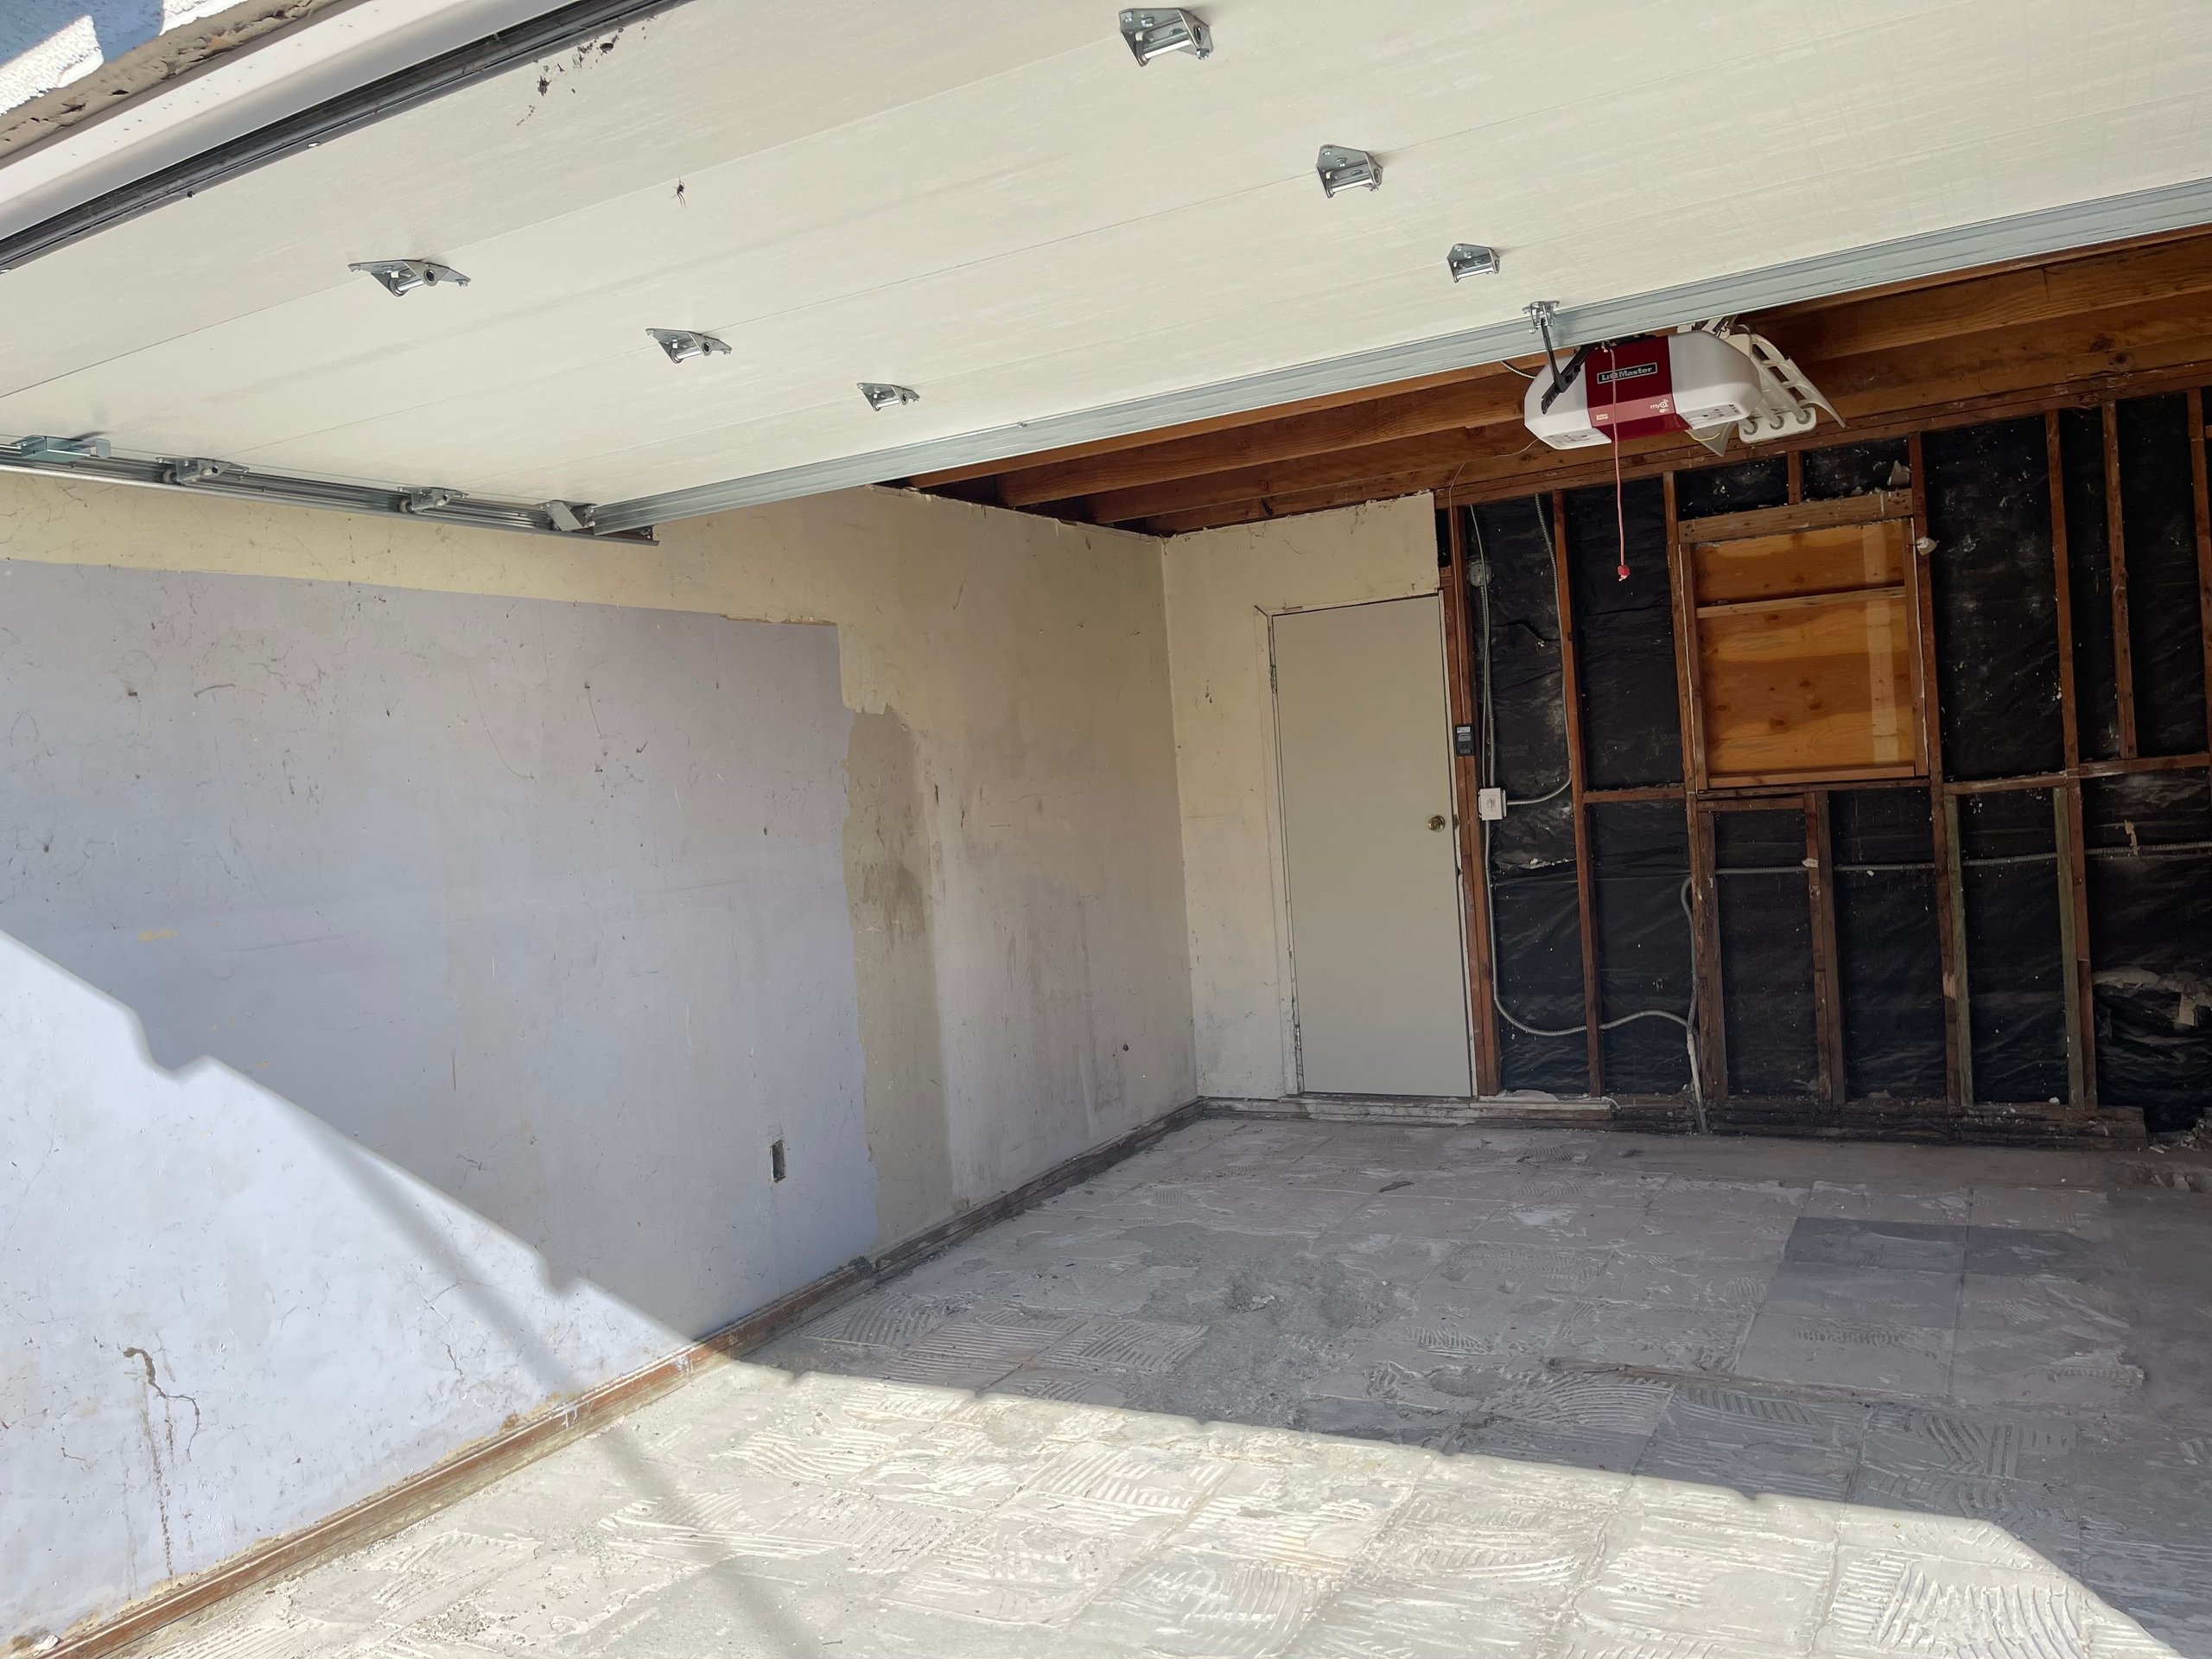 18x16 Garage self storage unit in Los Angeles, CA